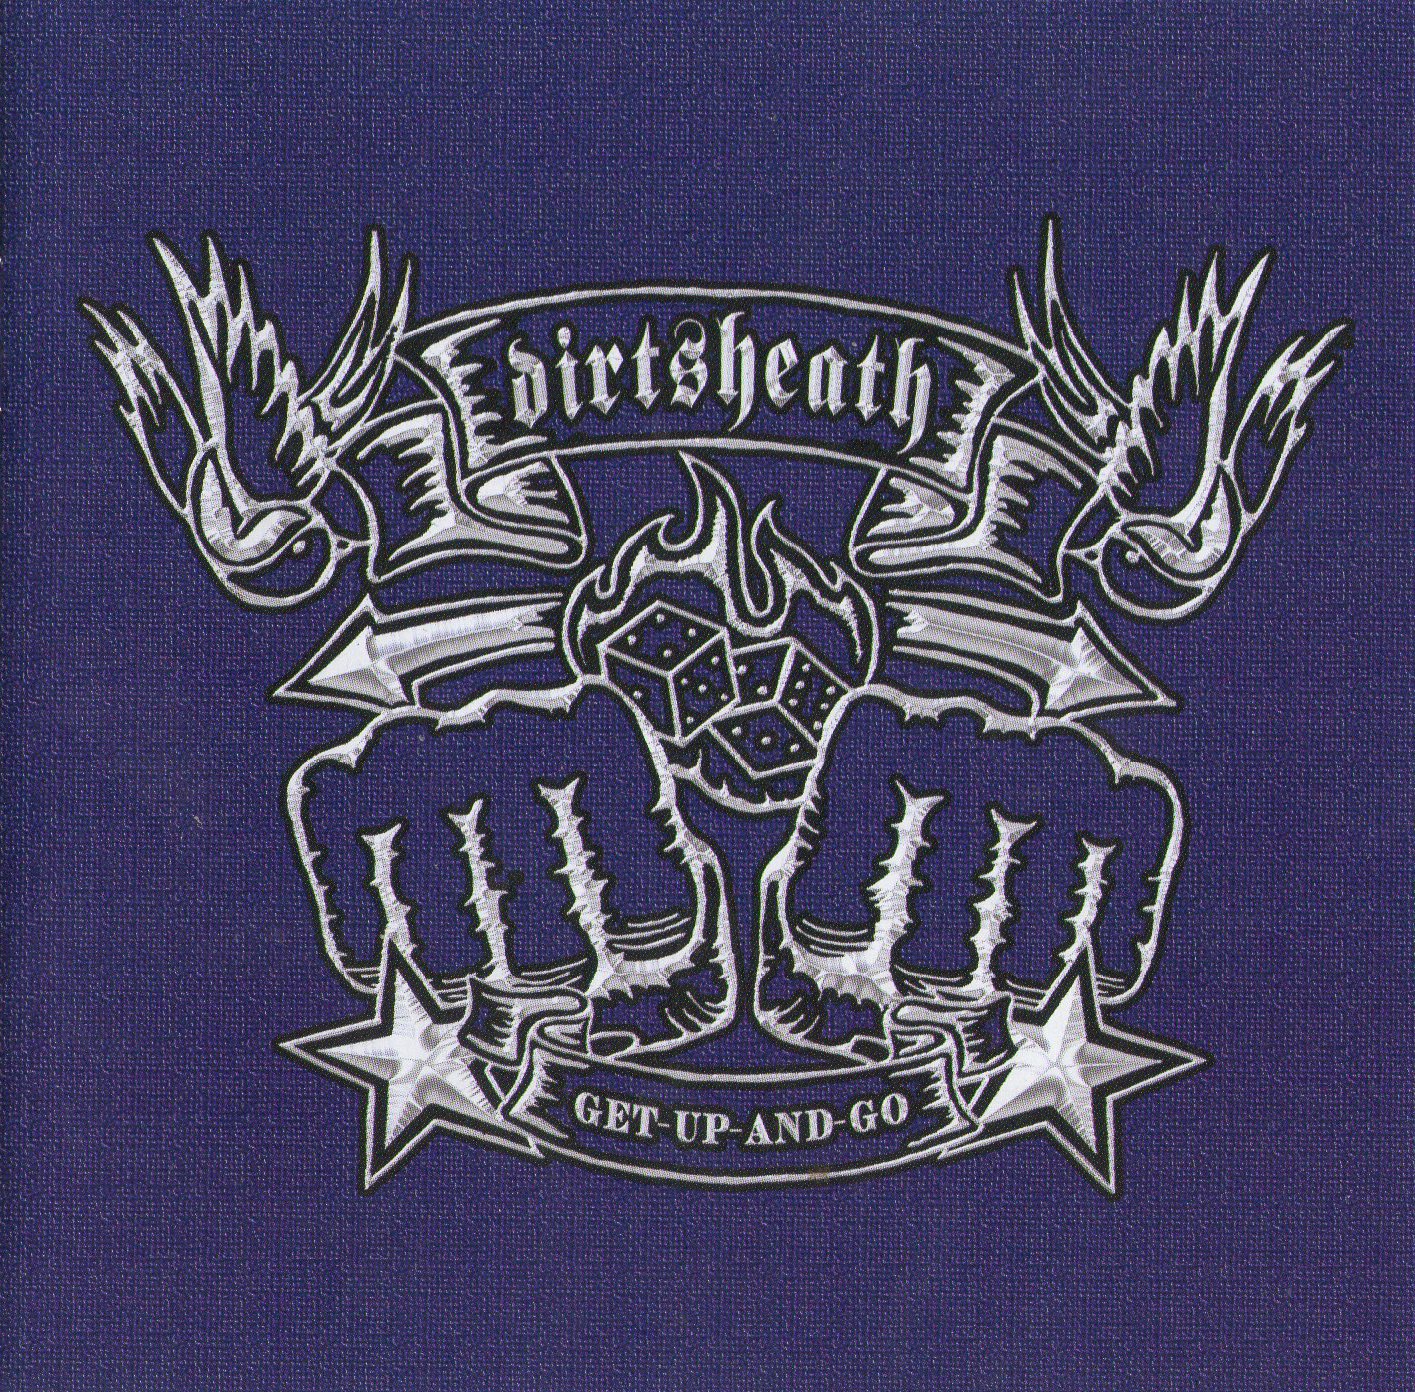 Dirtsheath - Get up and Go (CD)